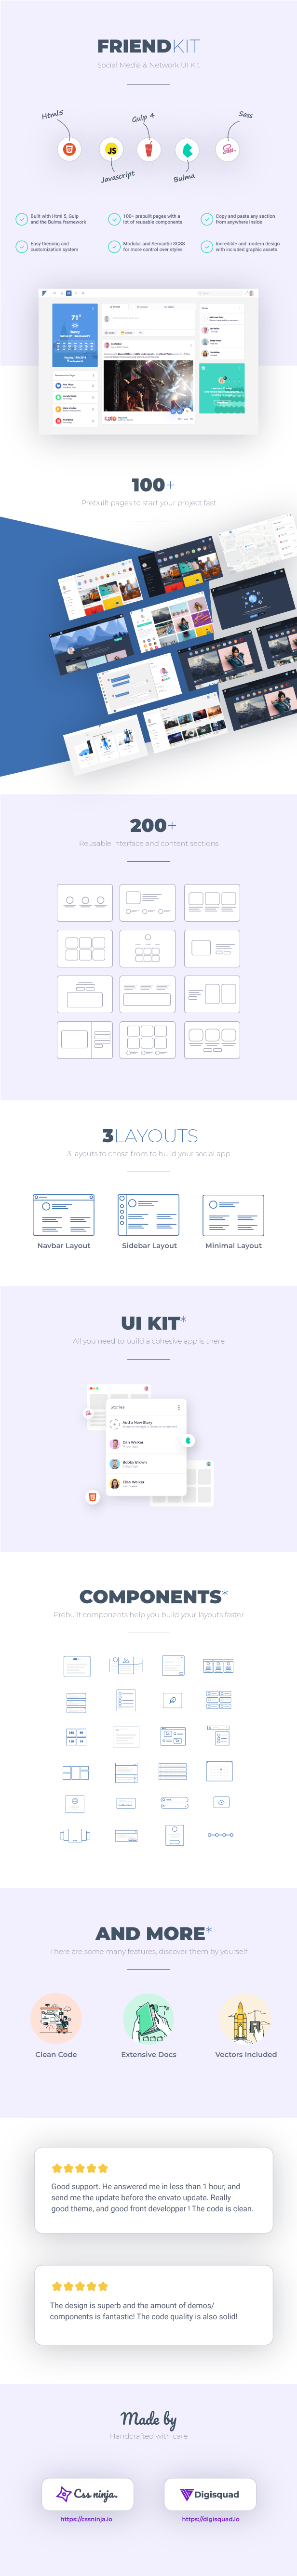 Friendkit - Social Media UI Kit - 1